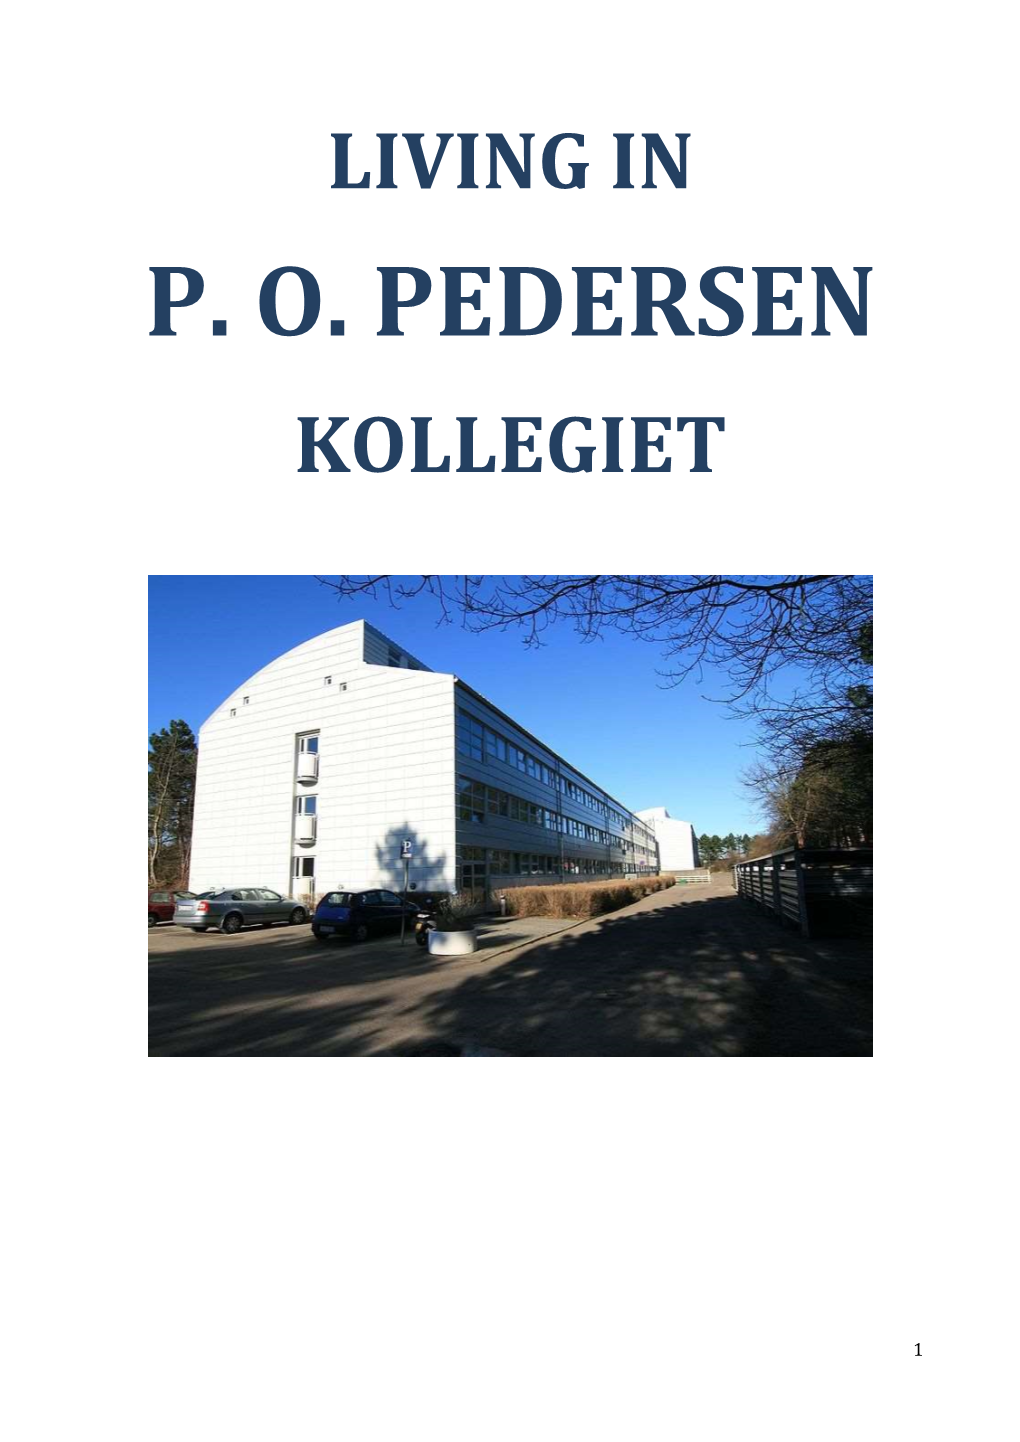 P. O. Pedersen Kollegiet